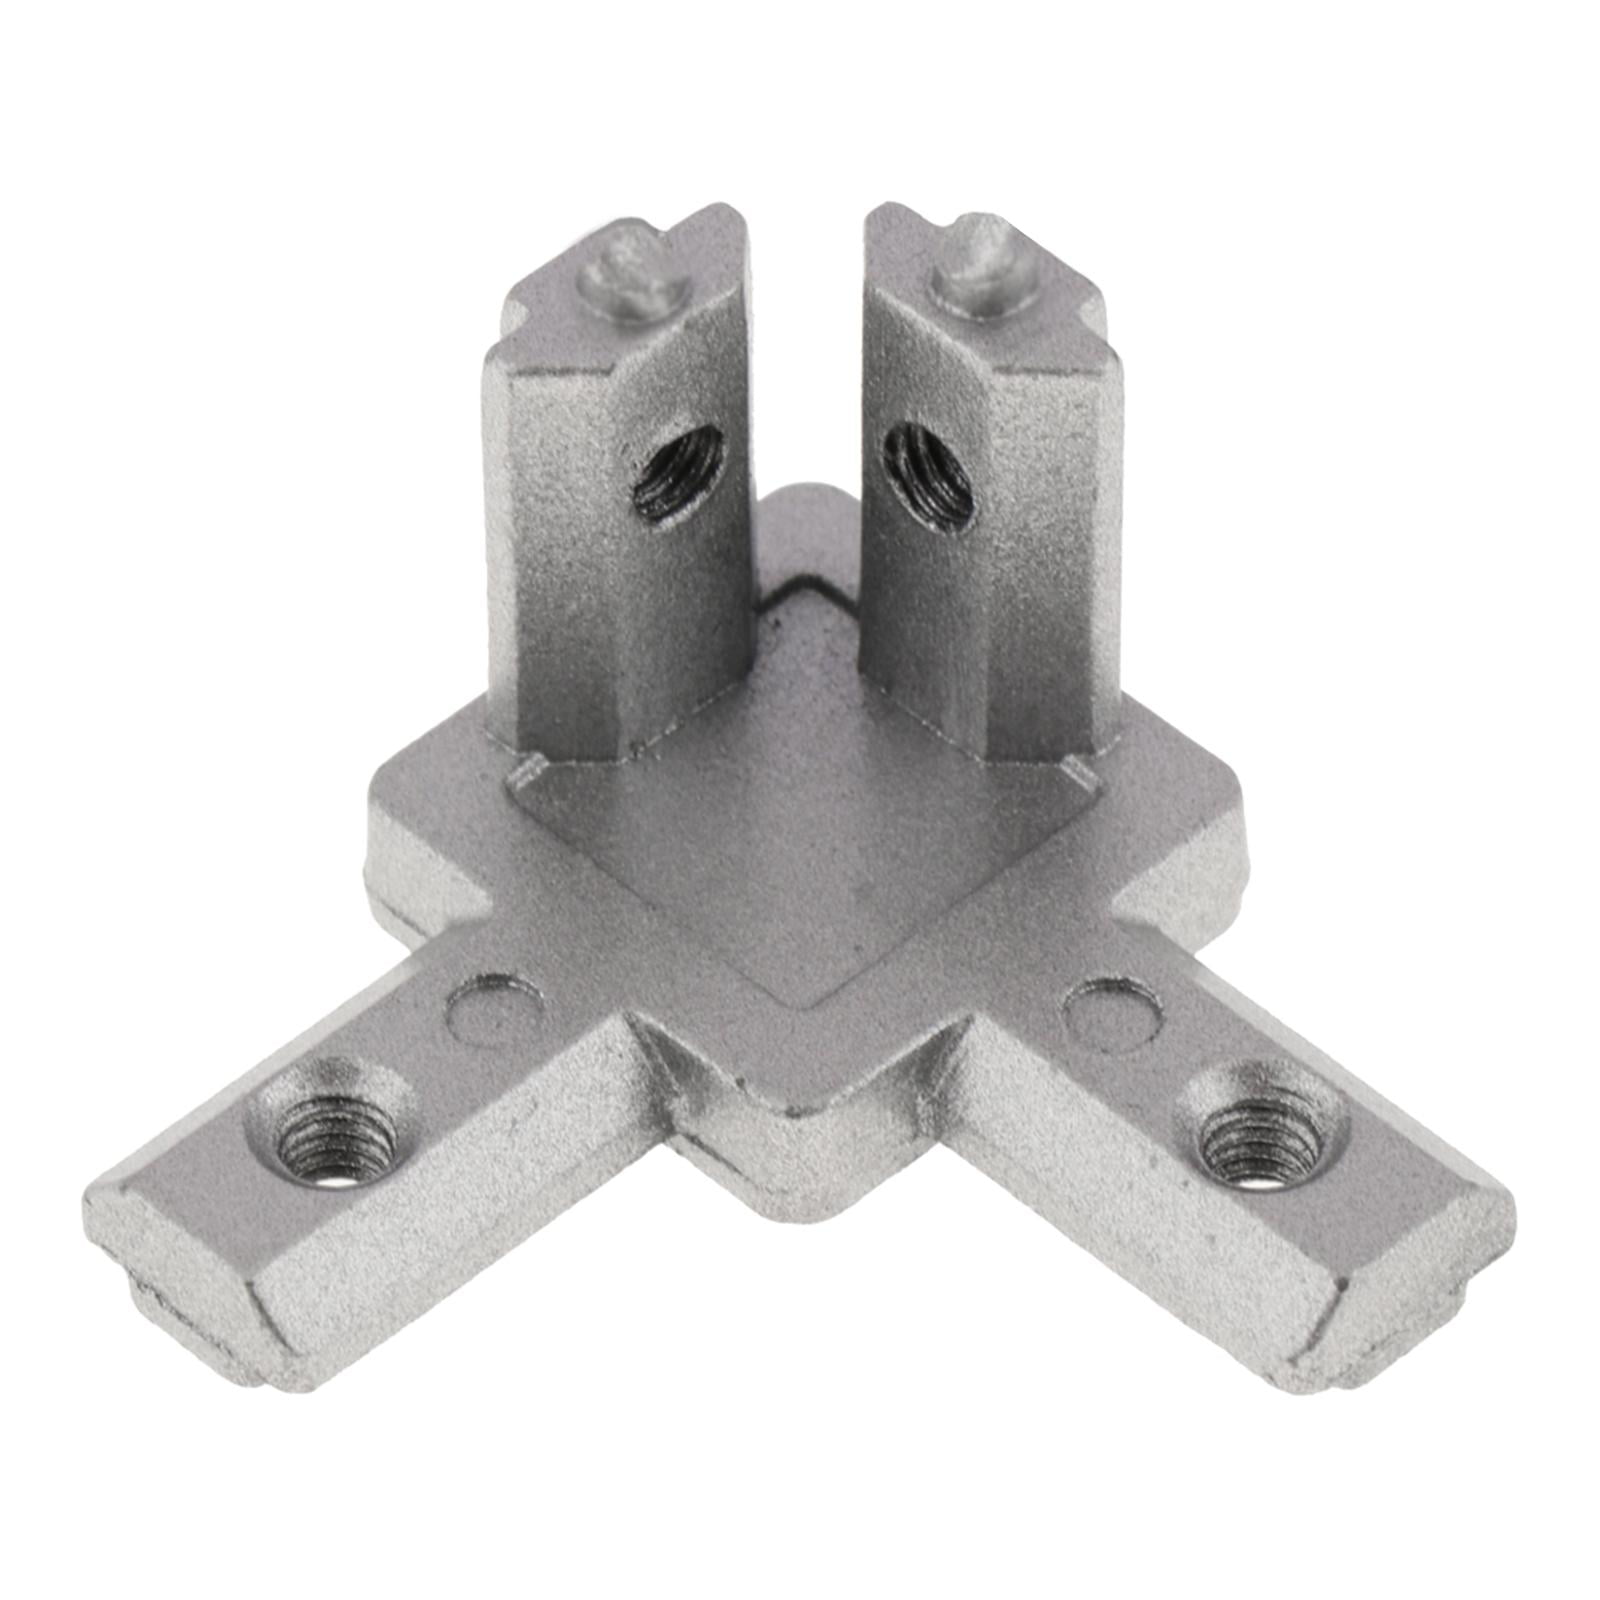 10pcs T Slot 2020 Aluminum Profile Interior Corner Connector Joint Bracket